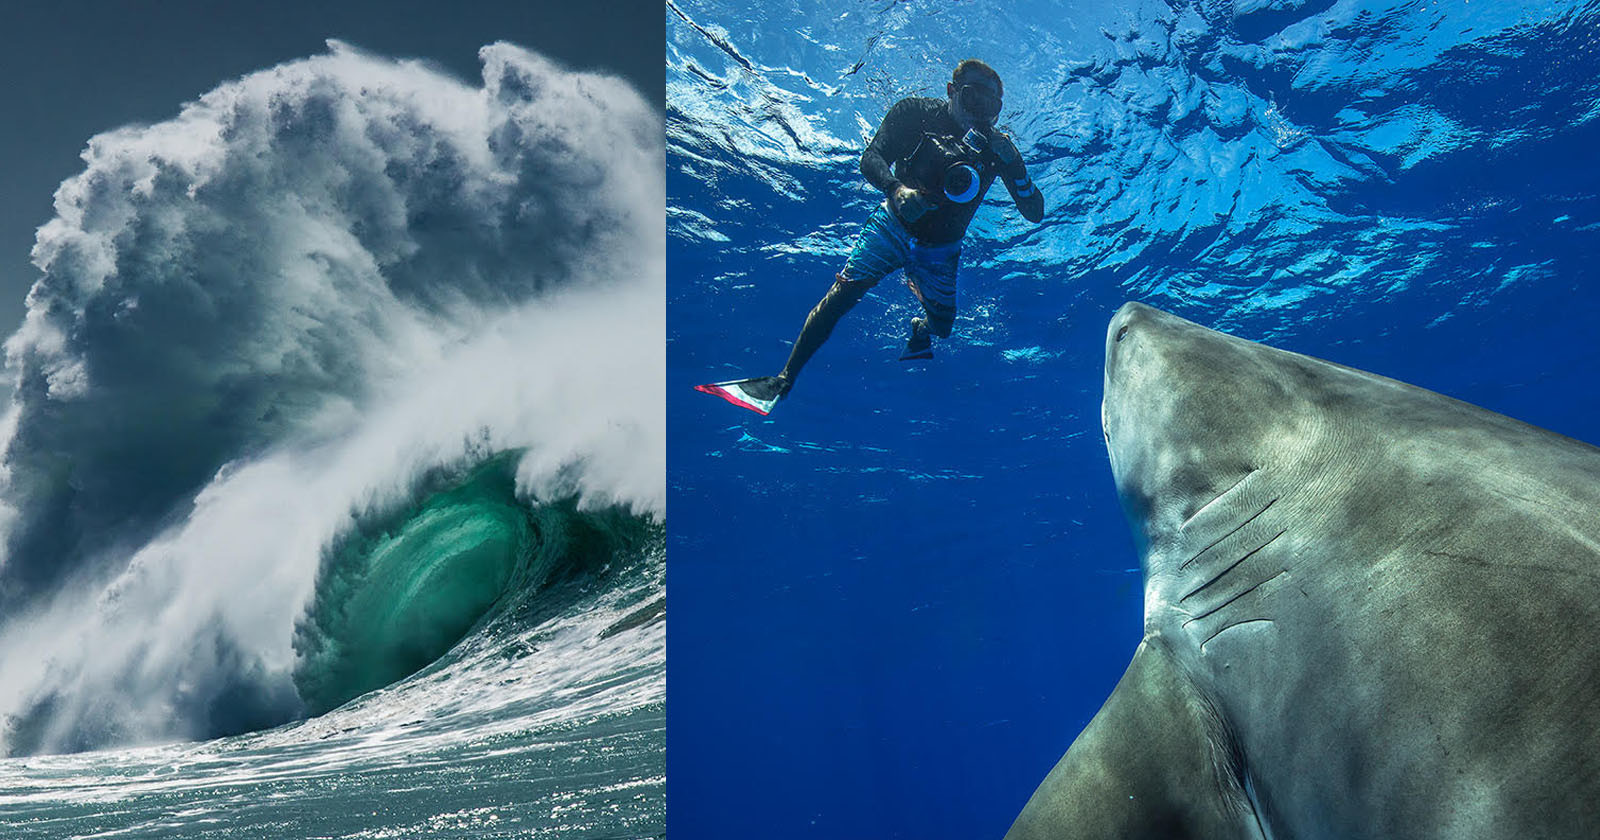  art waves lifetime awe-inspiring surf photographs 